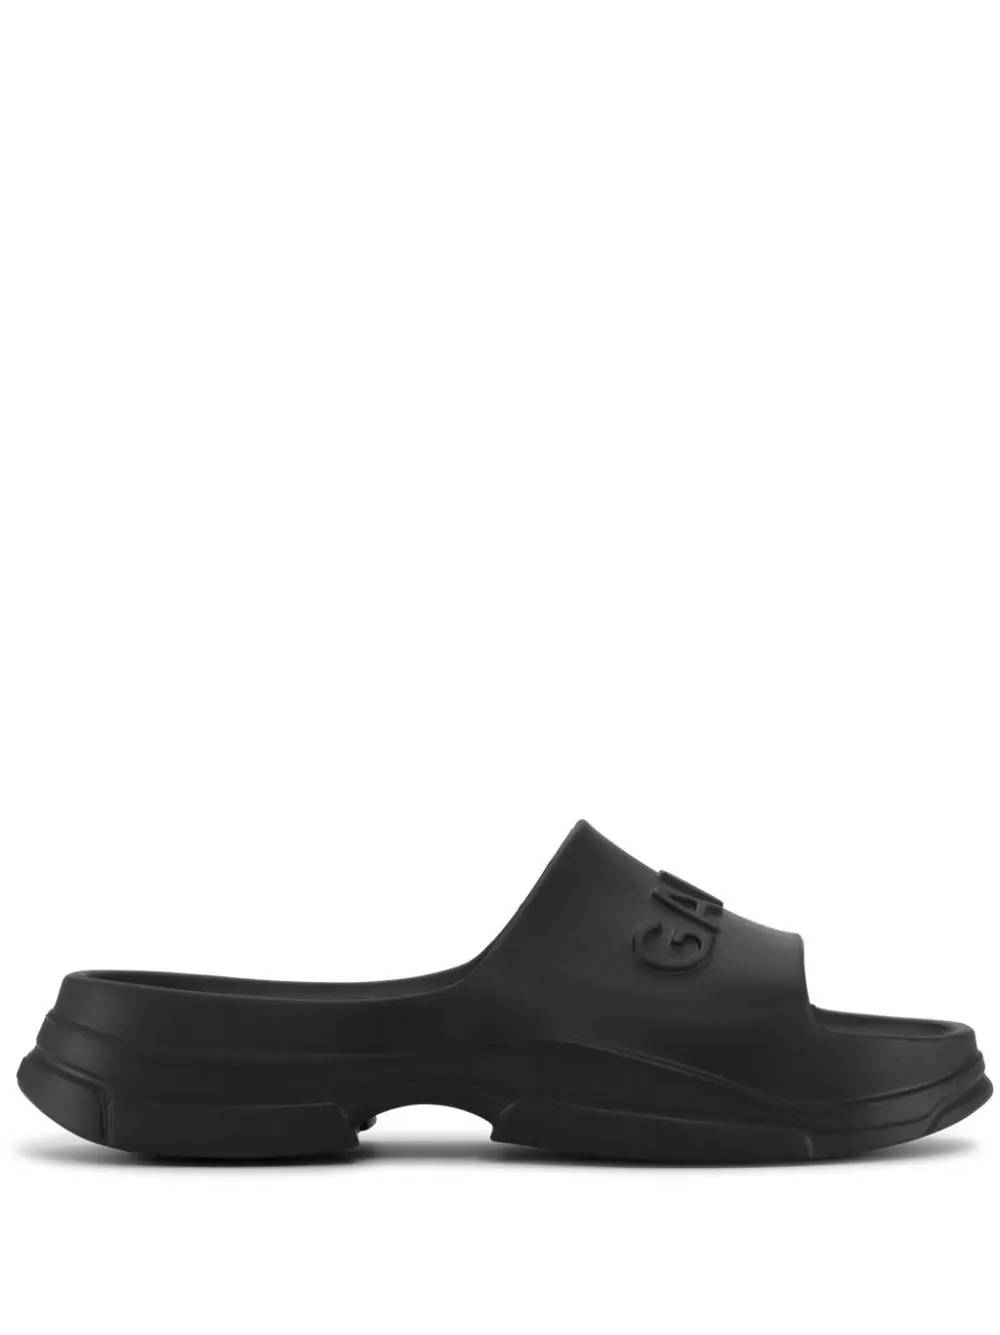 GANNI S2408 Woman Black Flat shoes - Zuklat